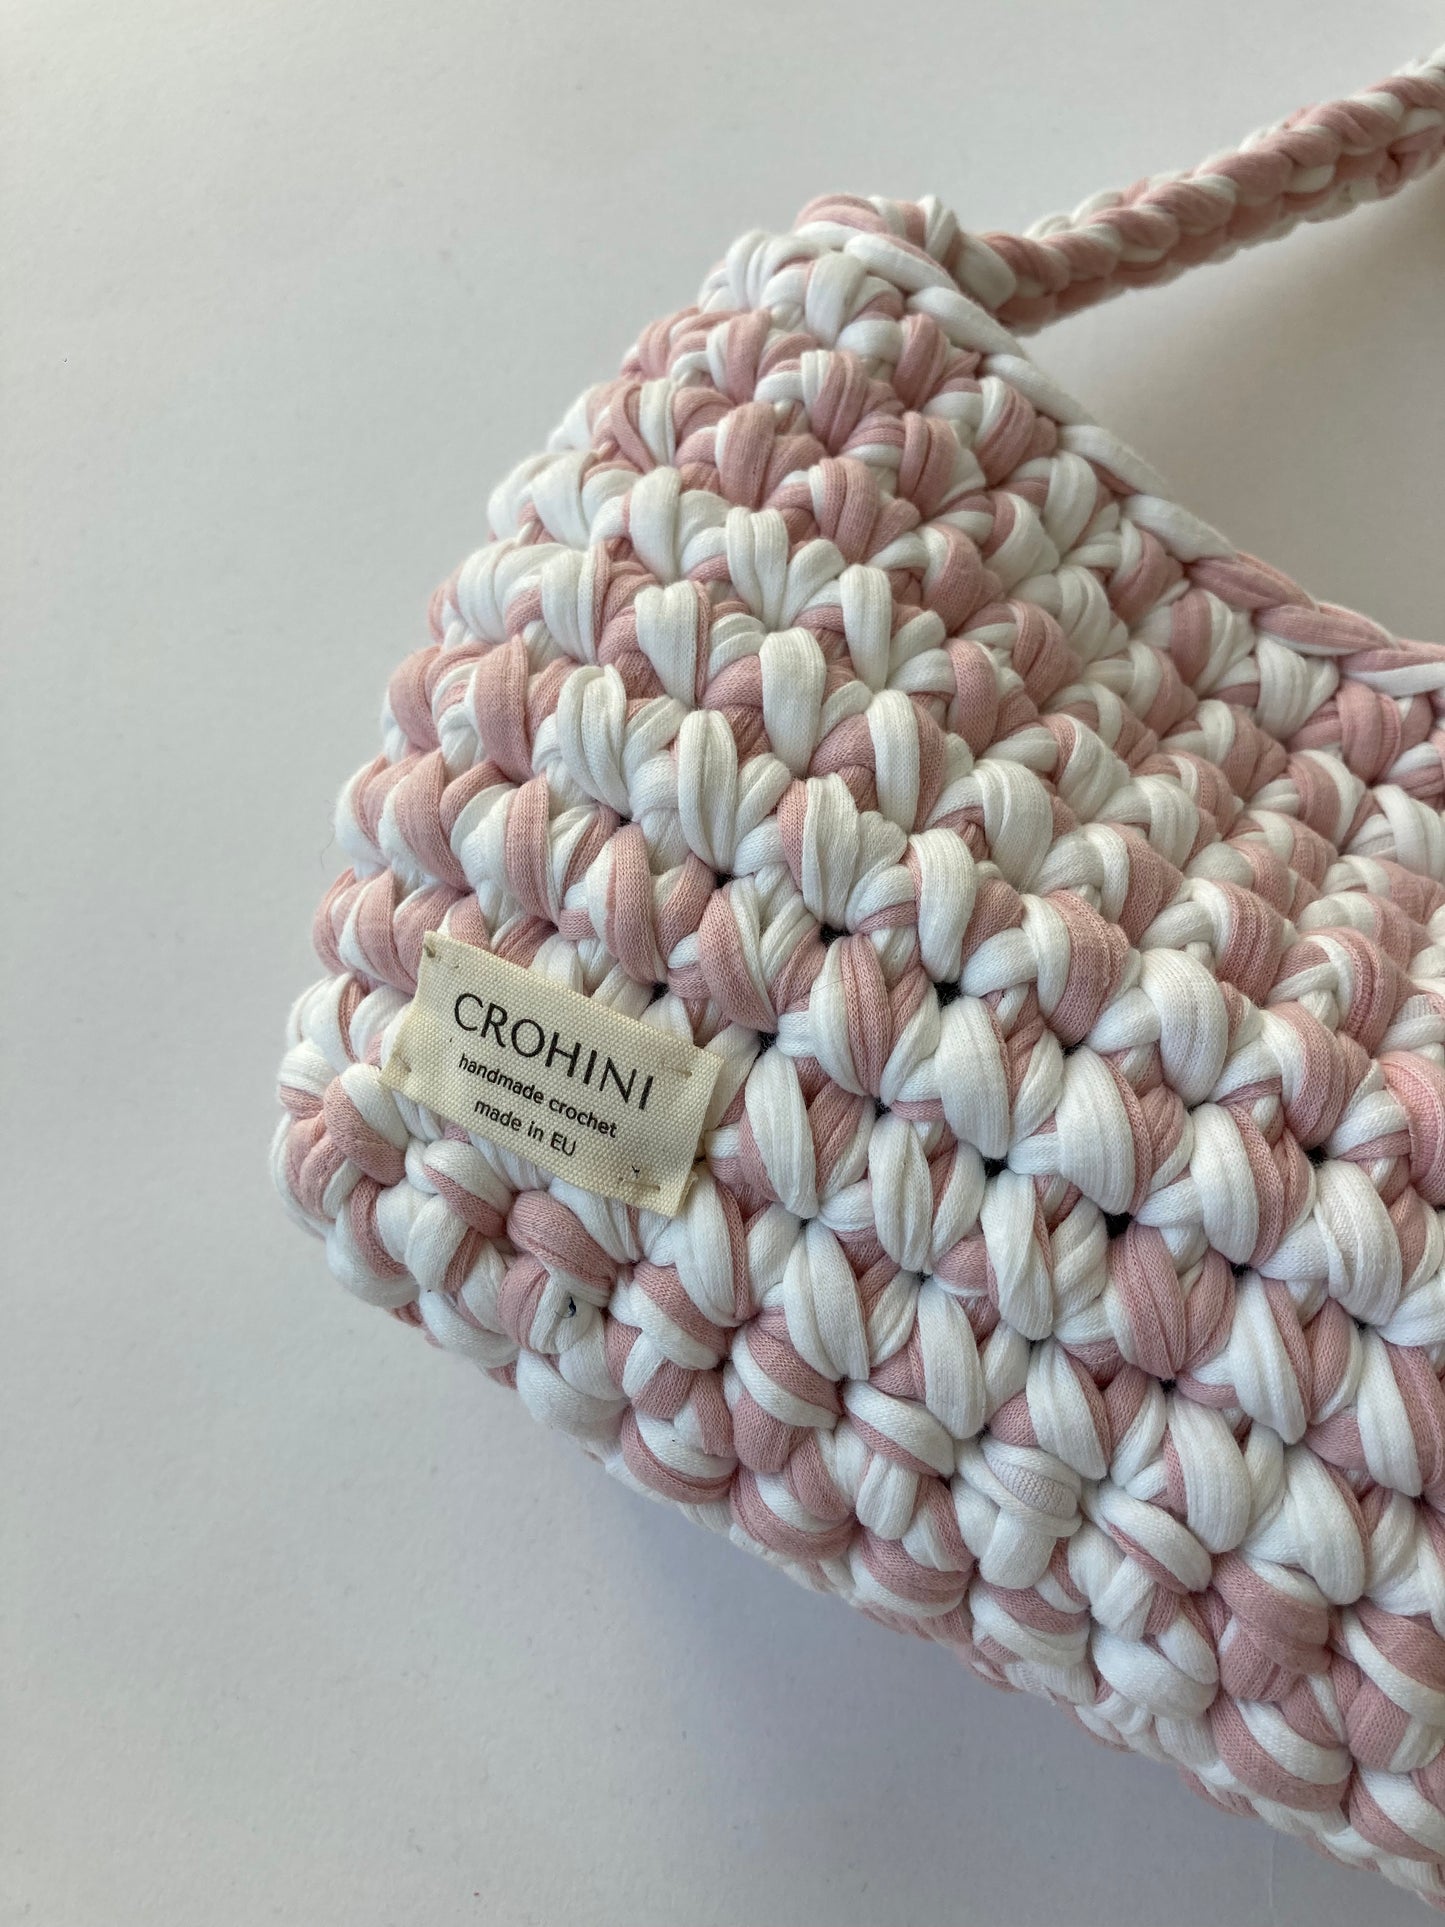 Small Dusty Pink Handmade Crochet Bag - TOM Design